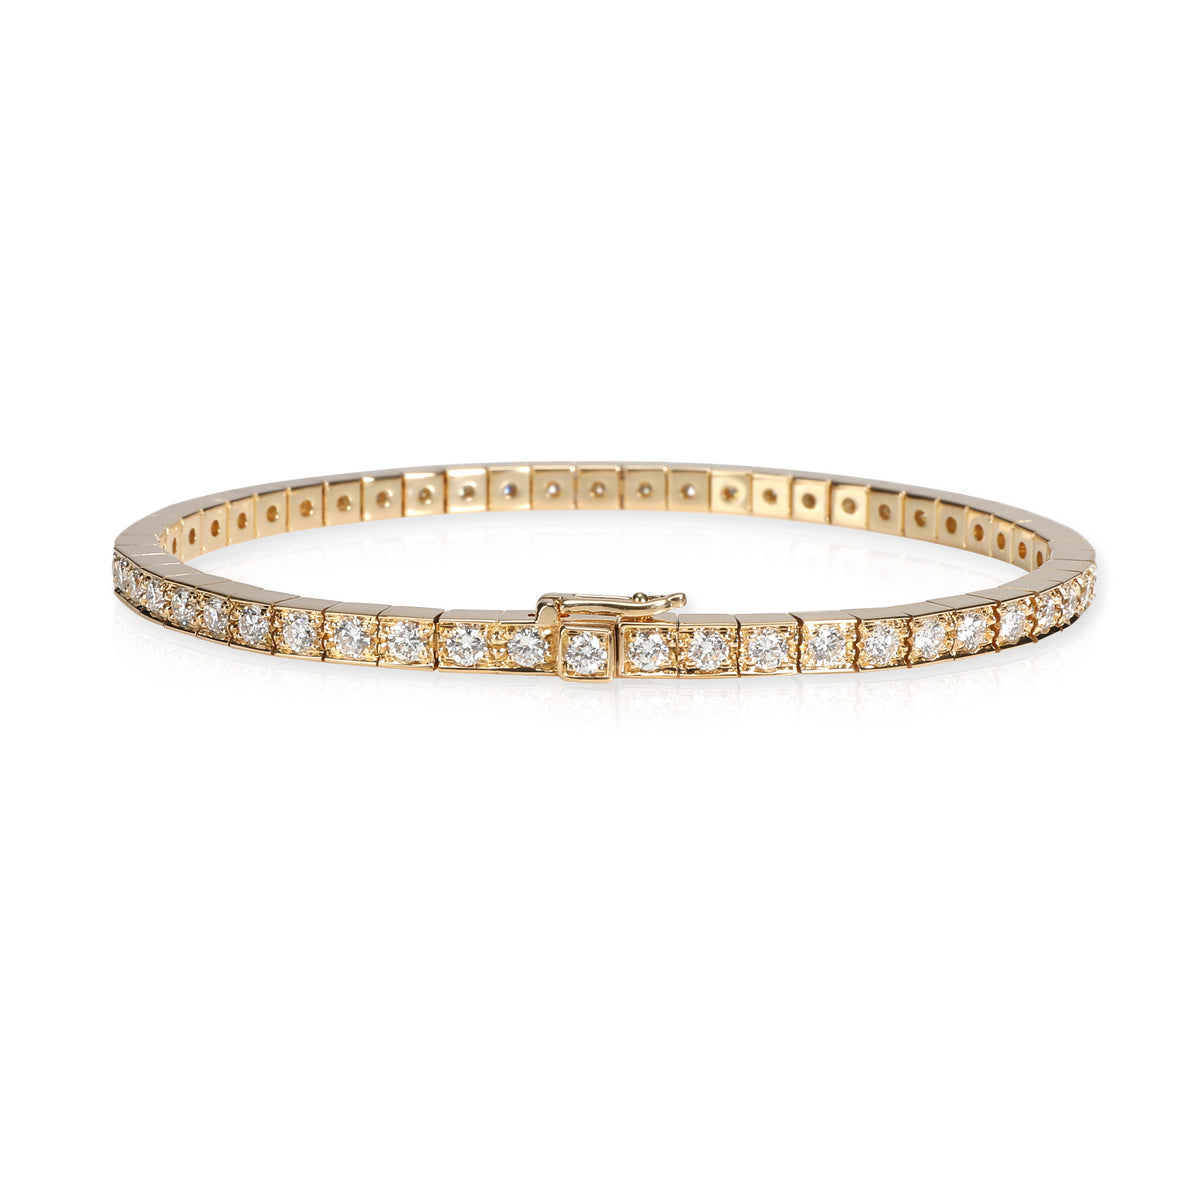 Cartier Lanieres Diamond Bracelet in 18K Yellow Gold 1.80 CTW